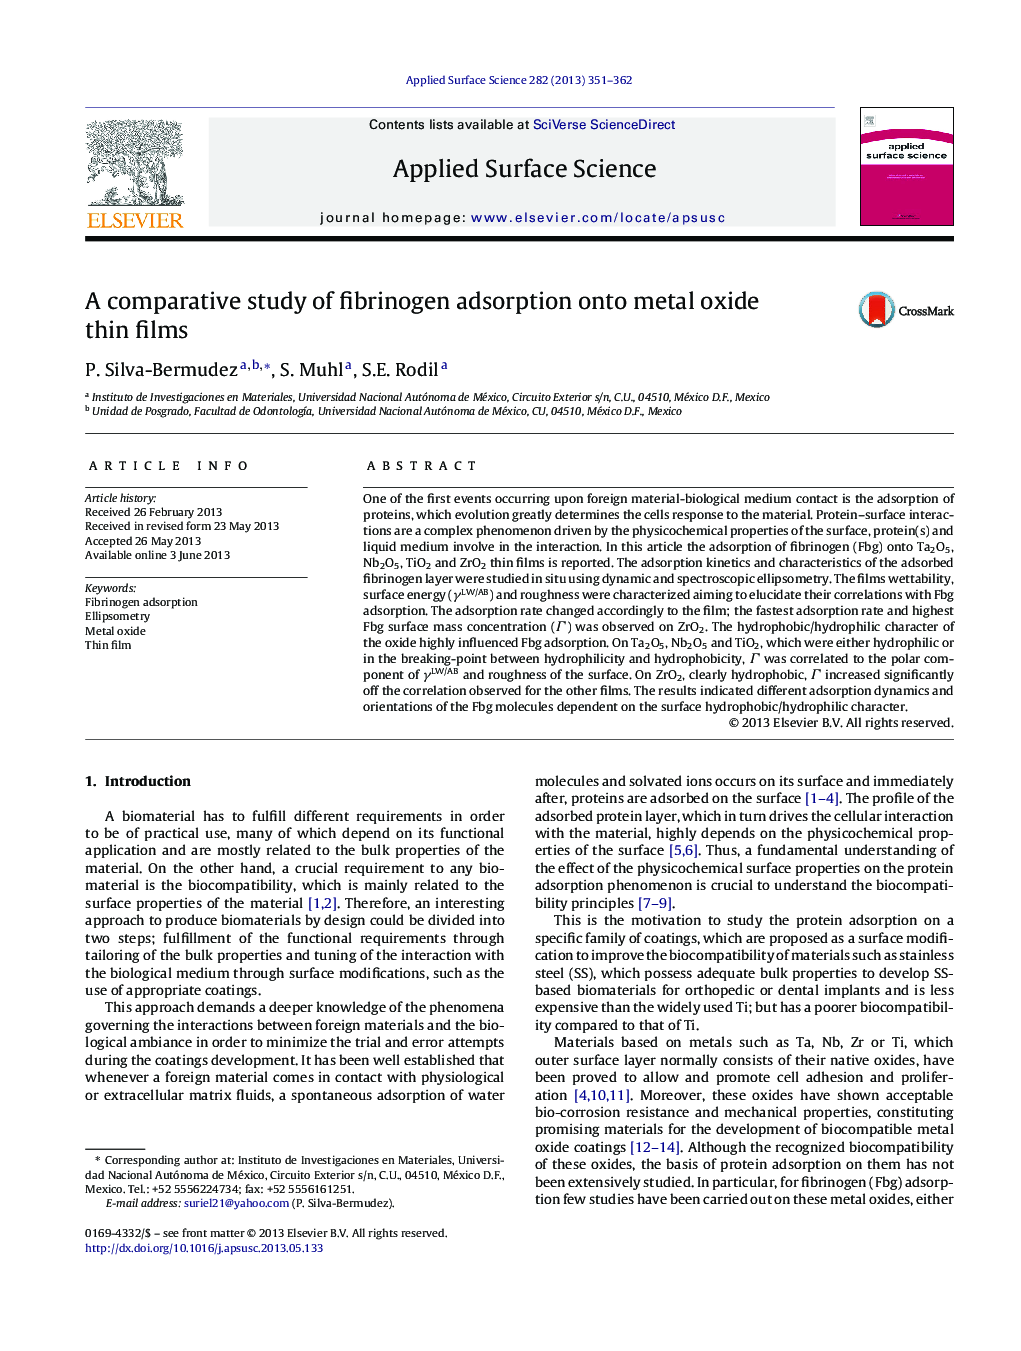 A comparative study of fibrinogen adsorption onto metal oxide thin films